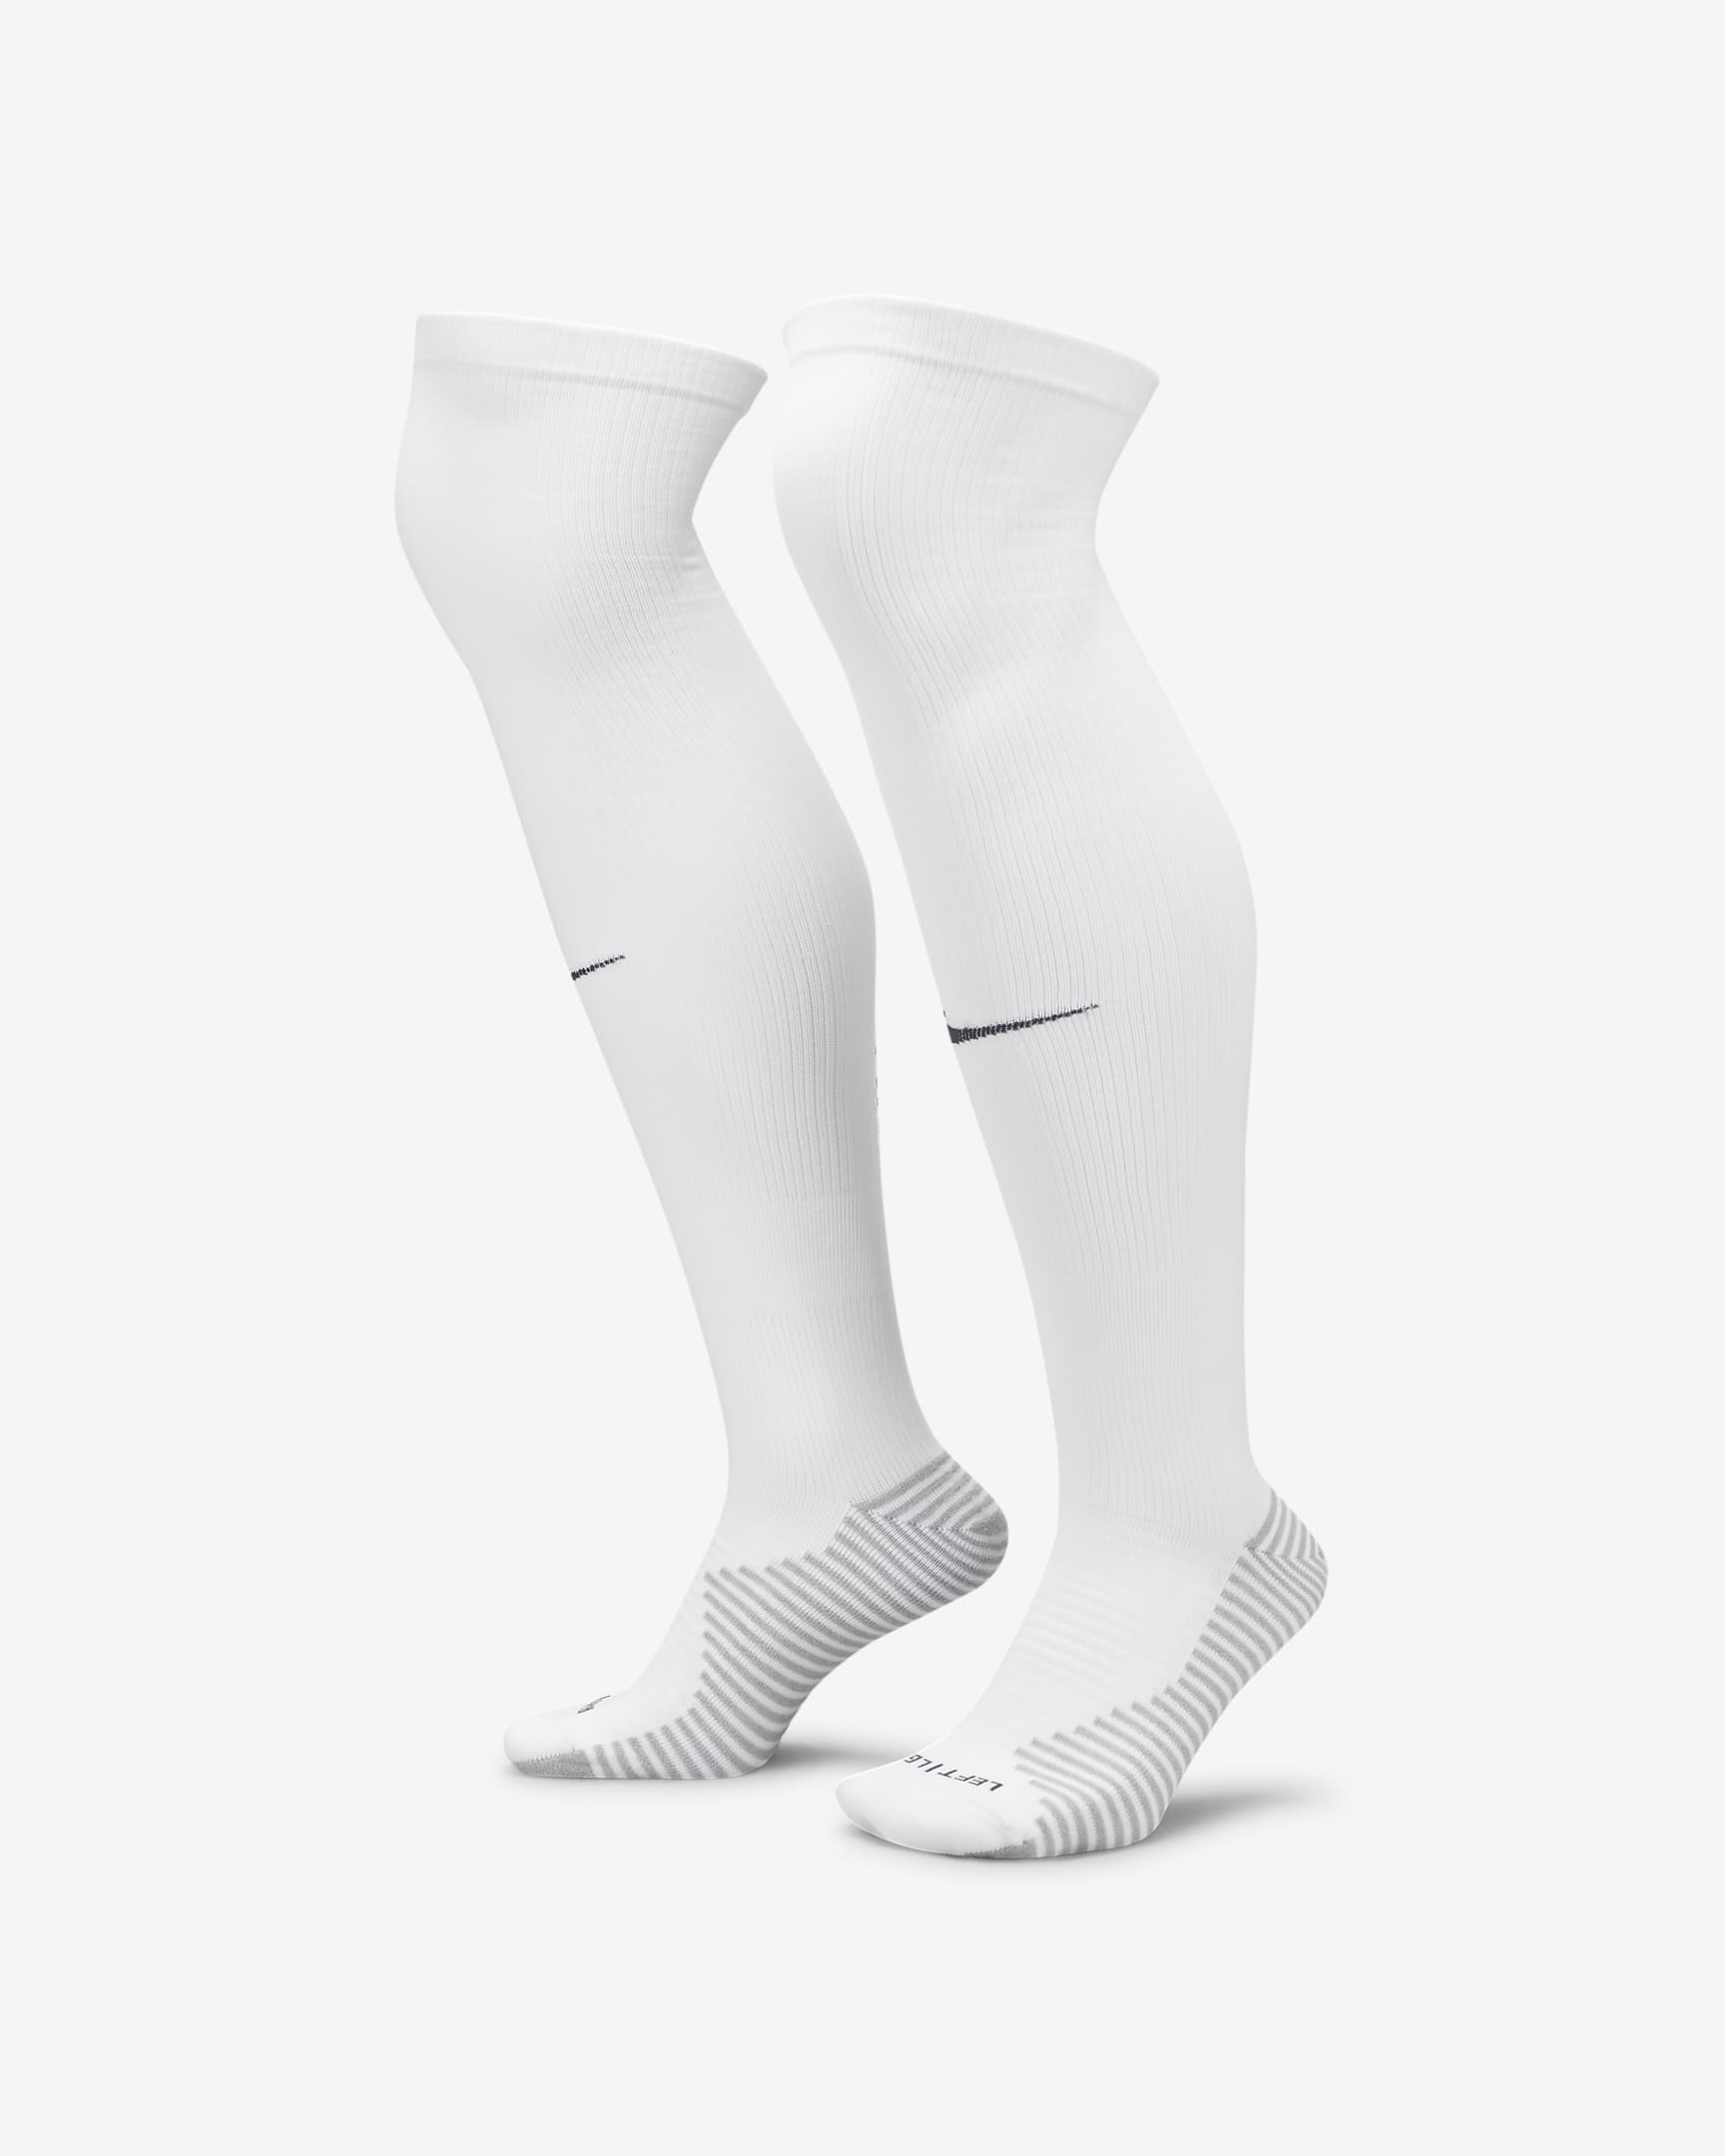 Paris Saint-Germain Strike Home/Away/Goalkeeper Knee-high Football Socks - White/Midnight Navy